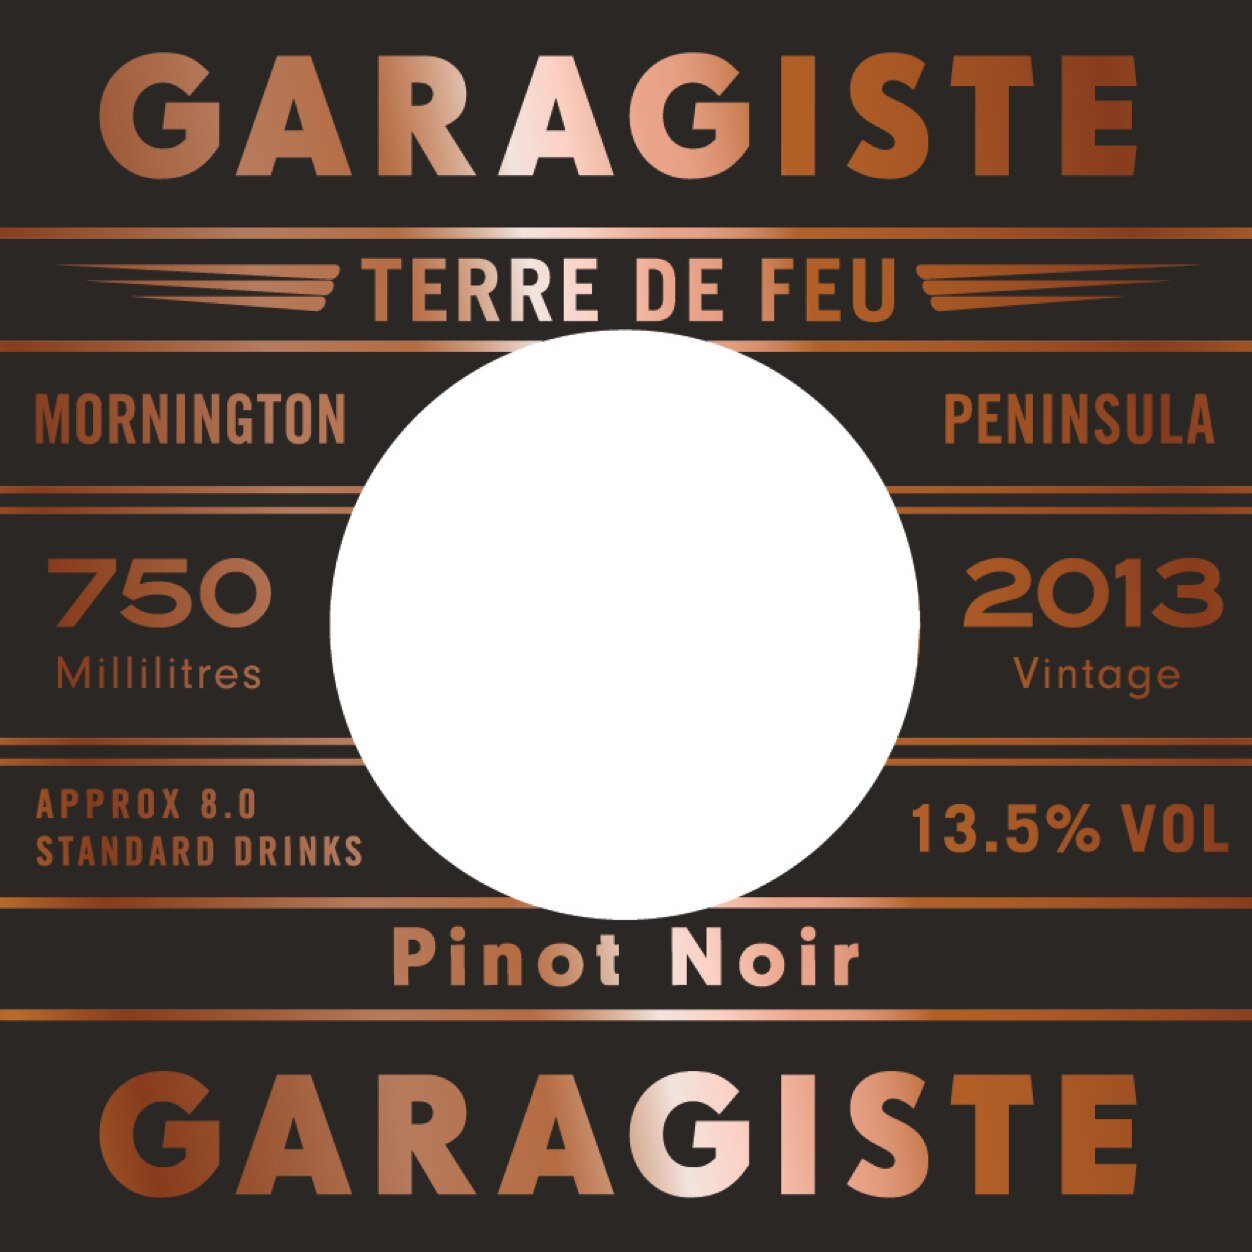 Premium Chardonnay and Pinot Noir from the Mornington Peninsula.
Barnaby Flanders - BF & Cam Marshall - CM